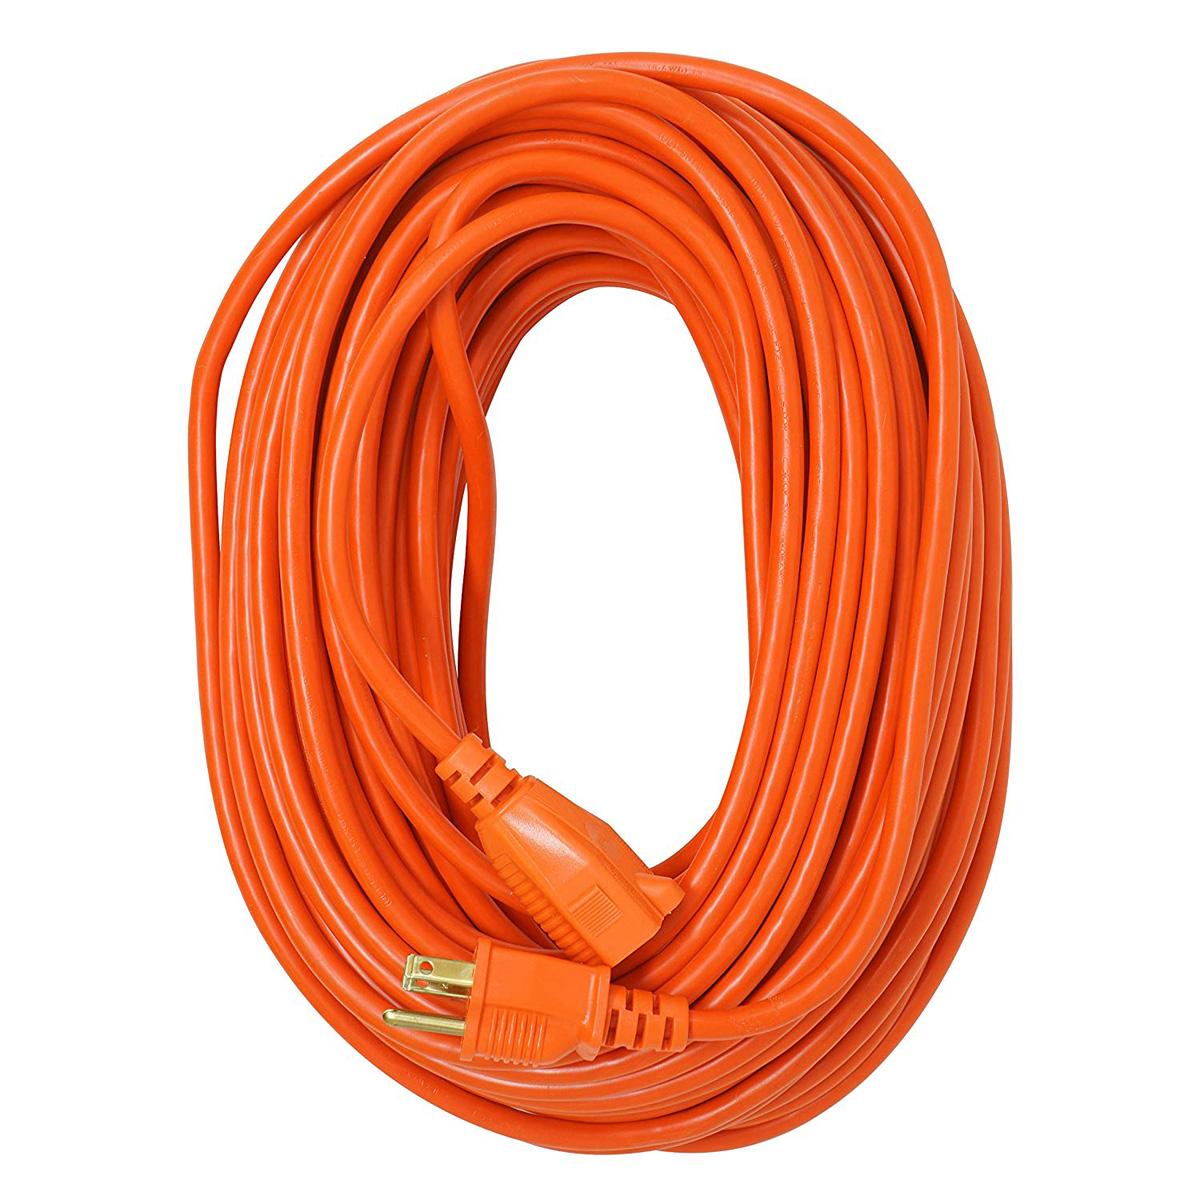 100ft Orange Weather Resistant Vinyl Outdoor Extension Cord for $14.83